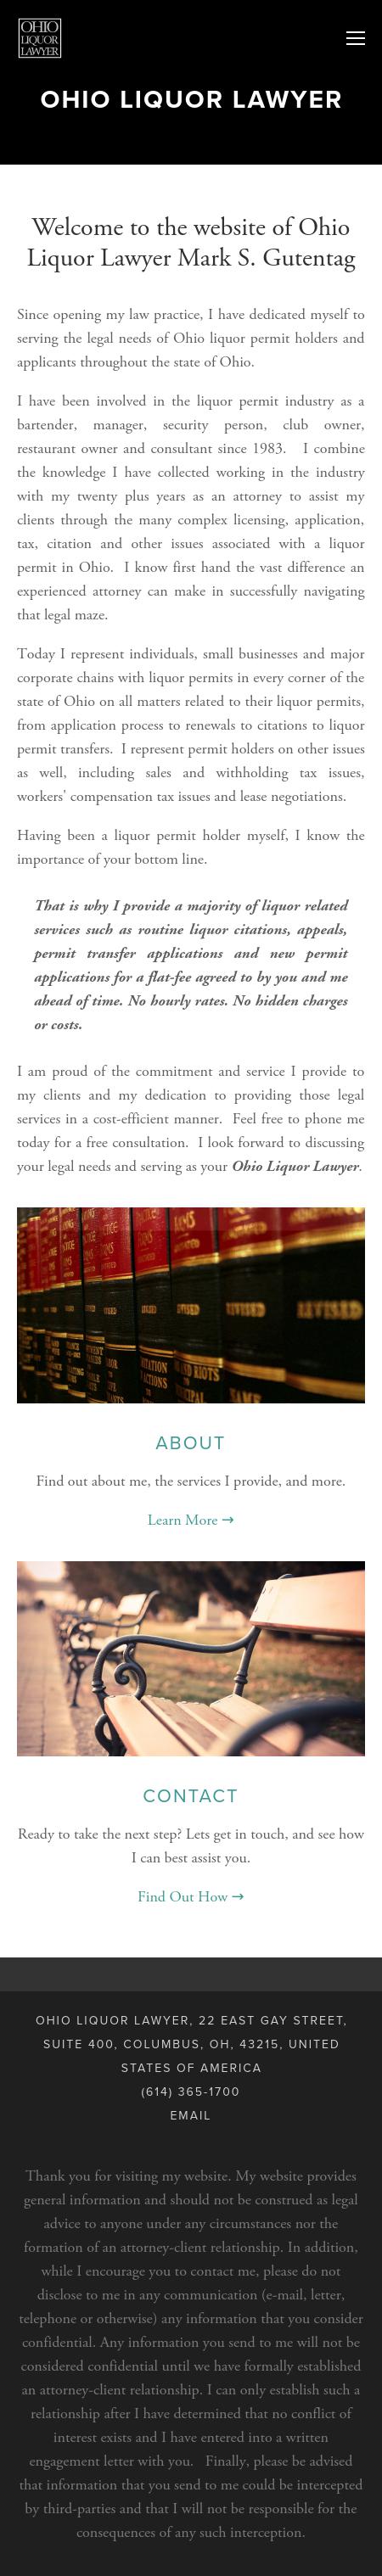 Koehler Neal LLC - Cleveland OH Lawyers